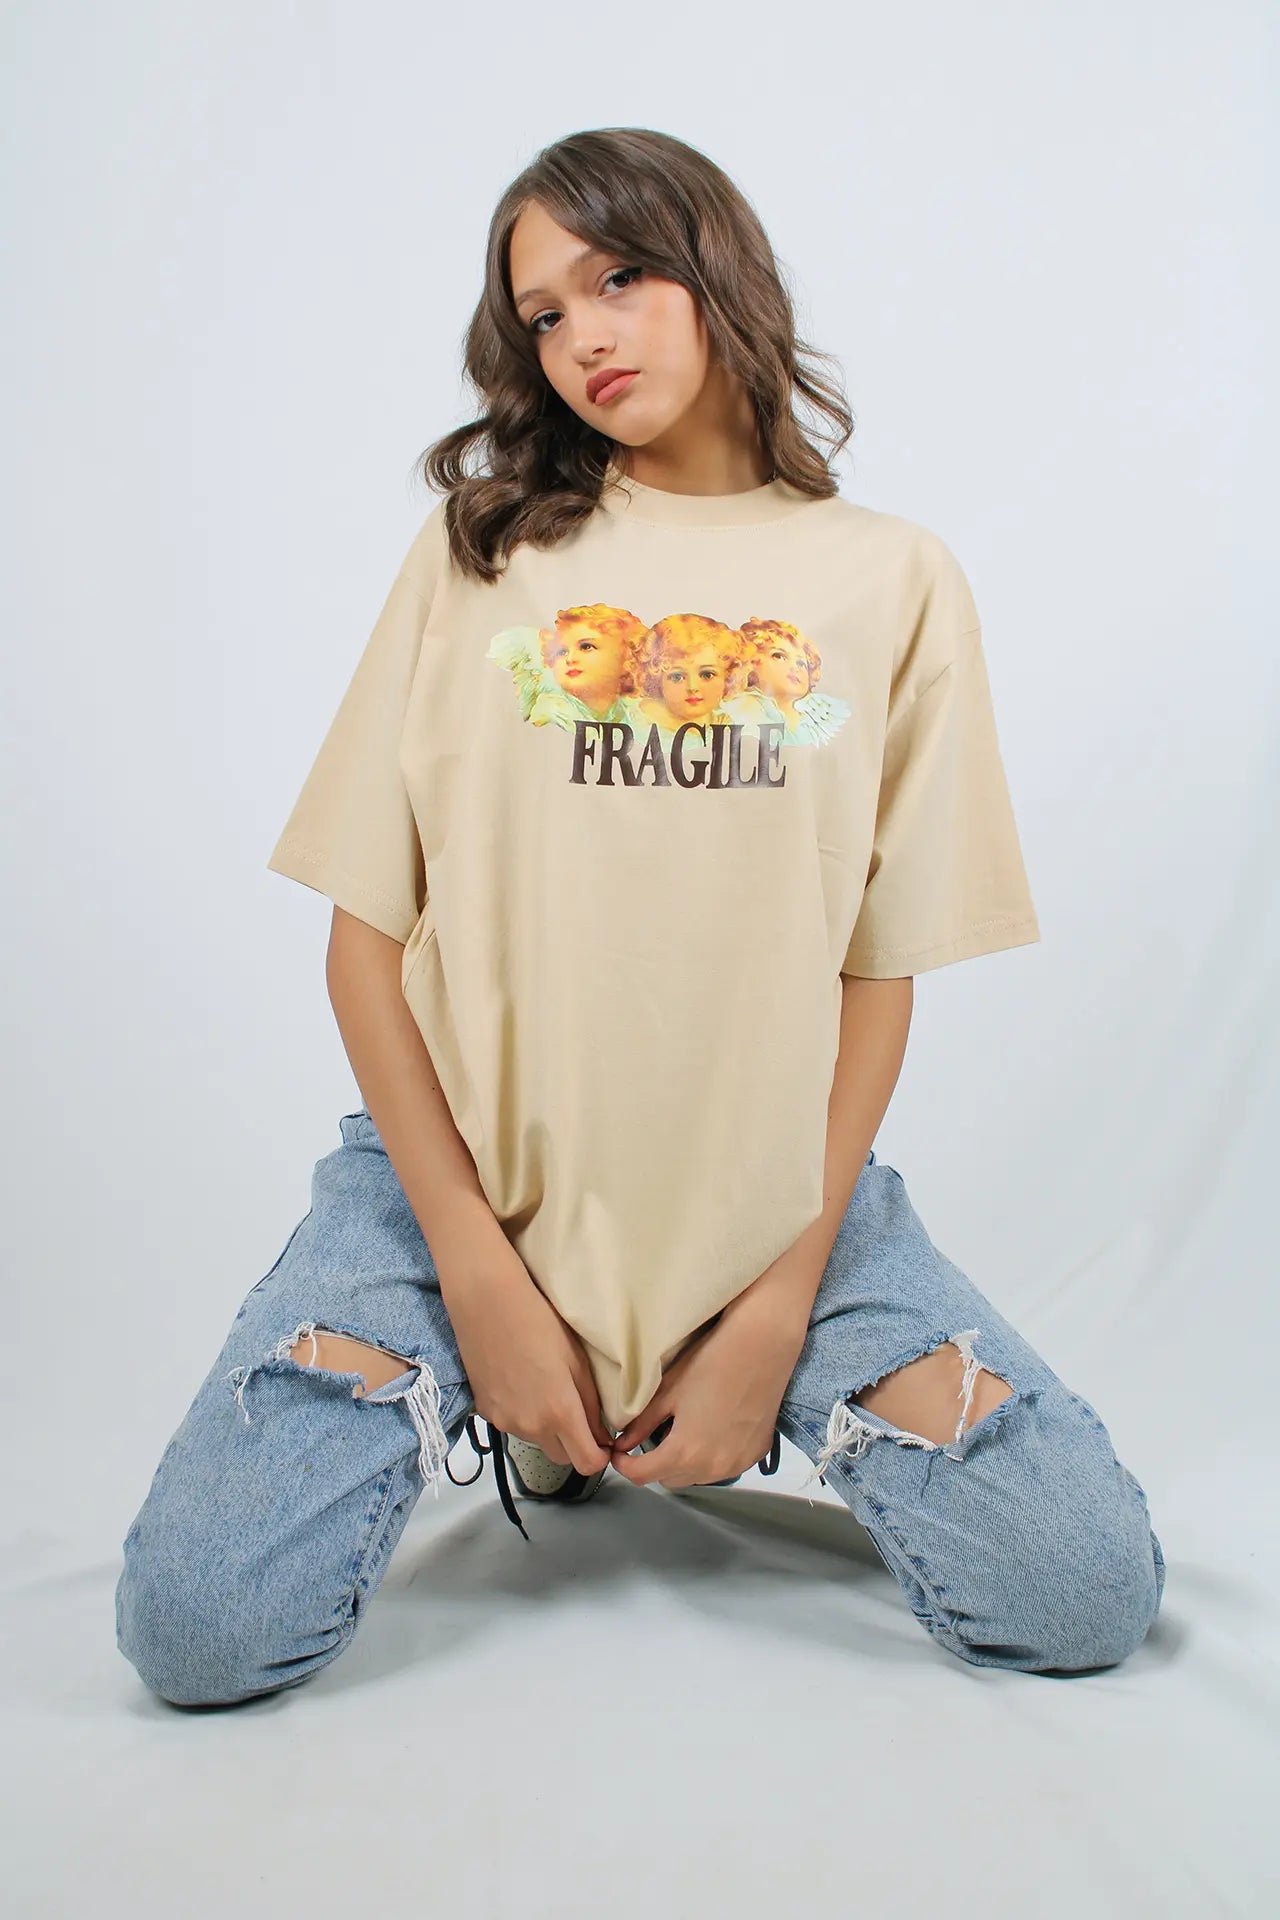 Fragile T-shirt